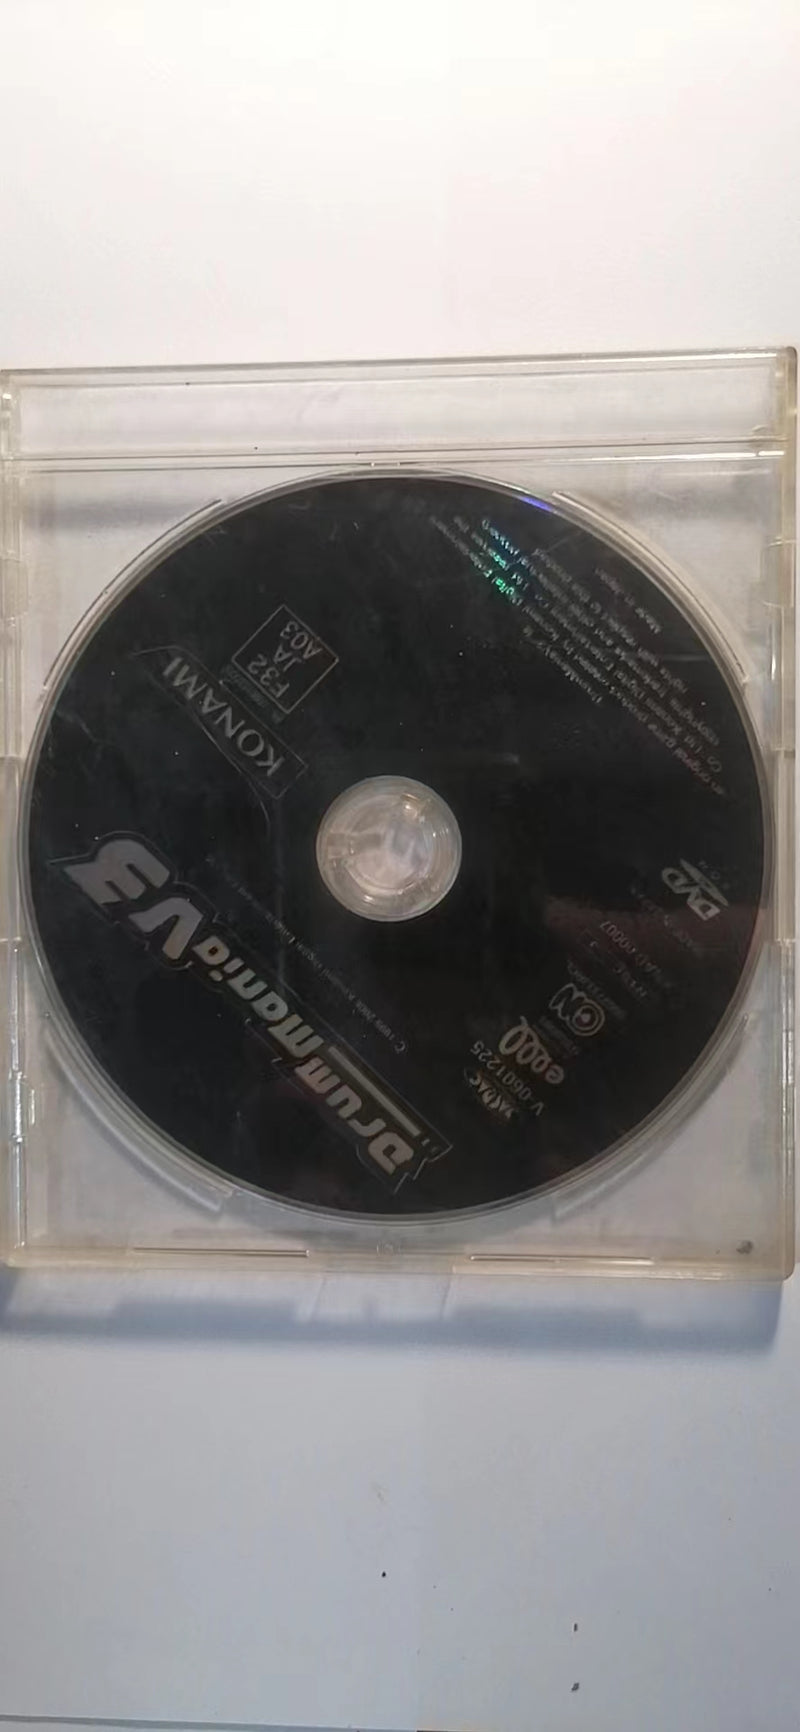 konami cd-rom Drum Mania V3. disc only